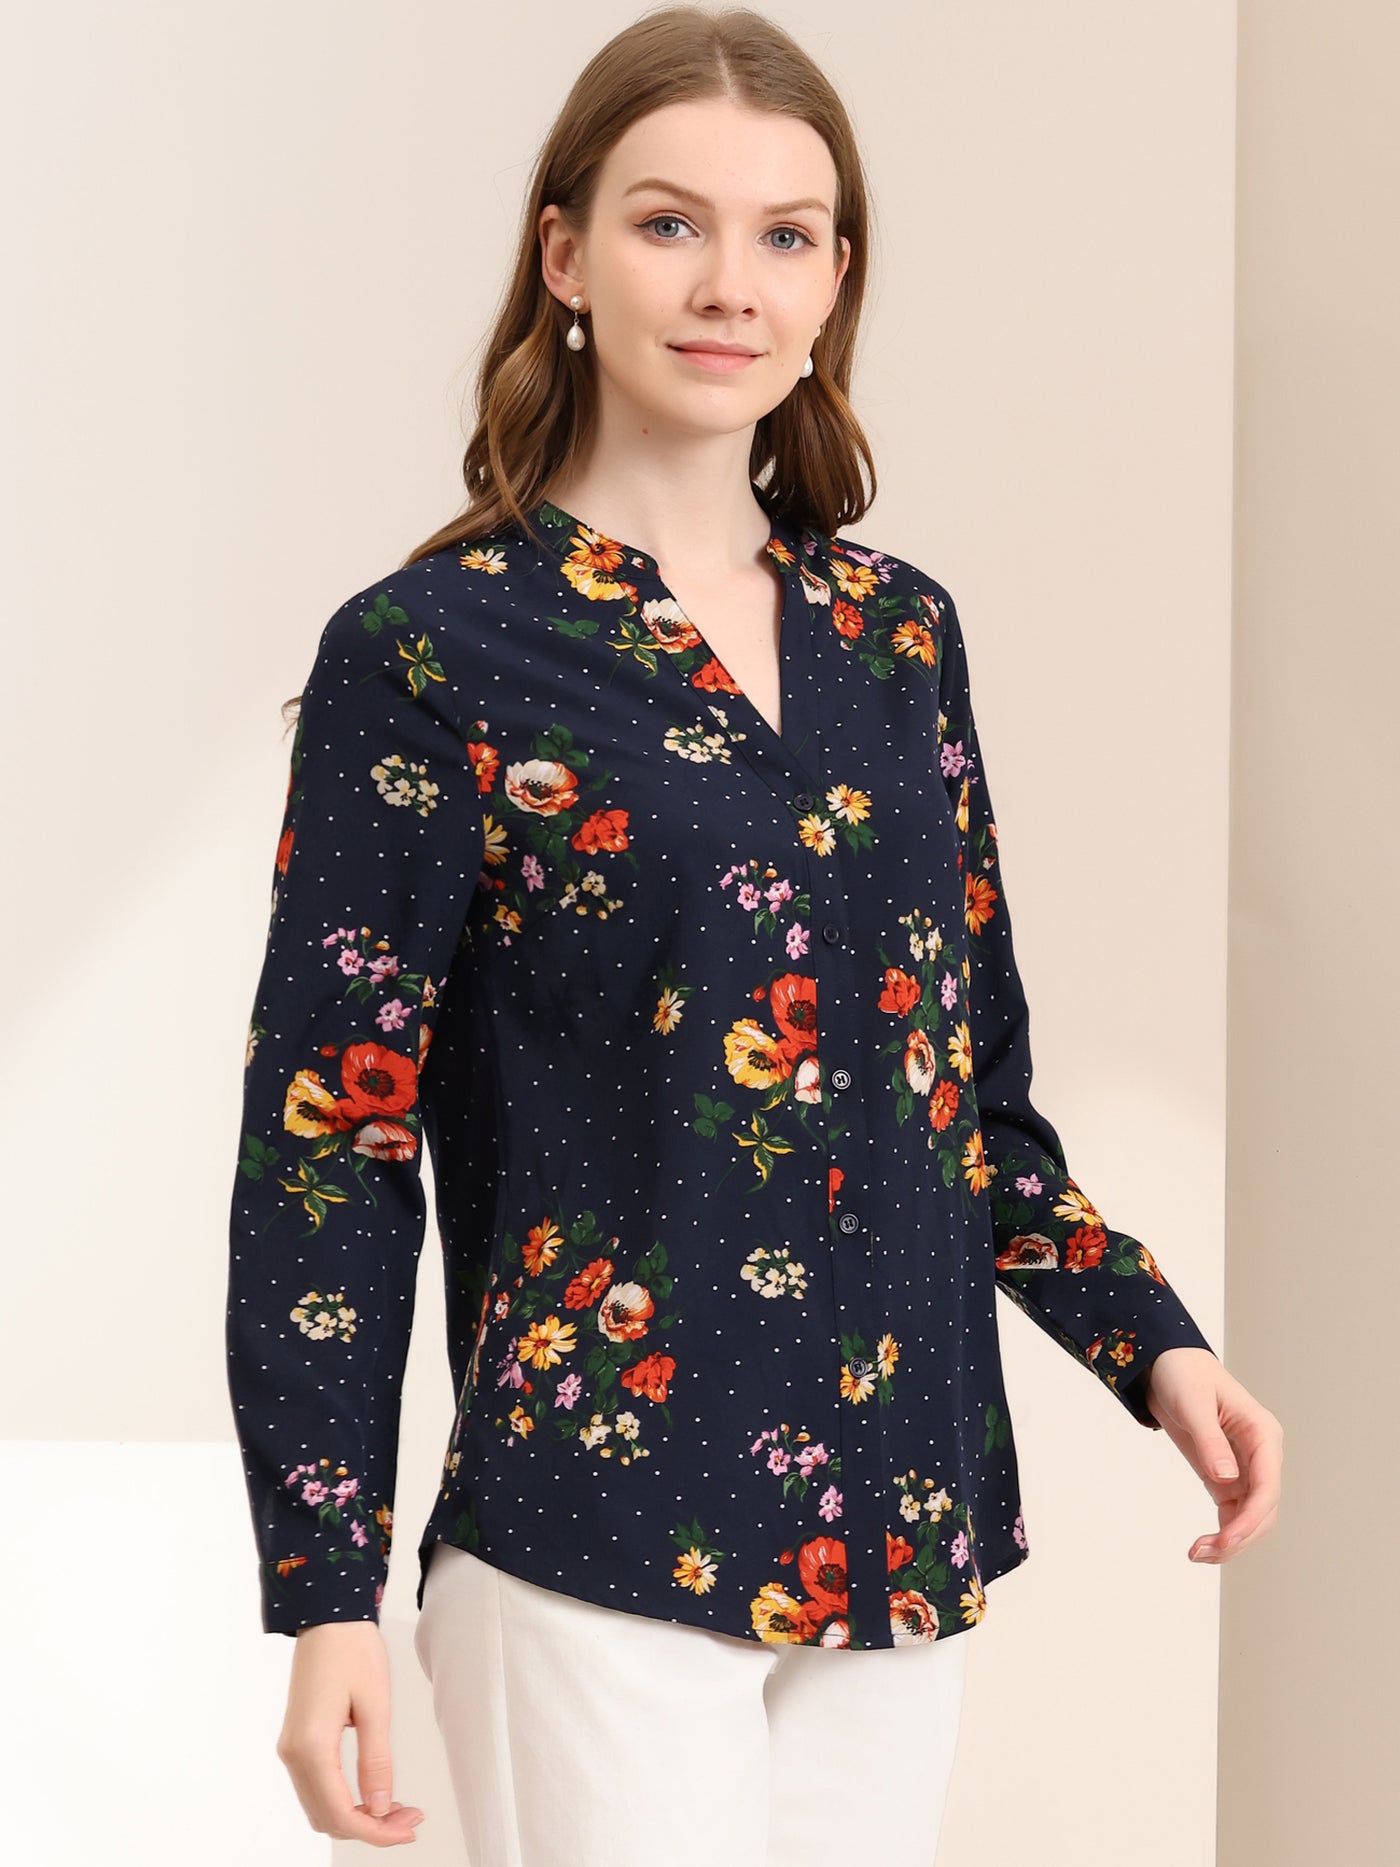 Allegra K Chiffon Floral Tops V Neck Long Sleeve Button-Up Blouse Shirt